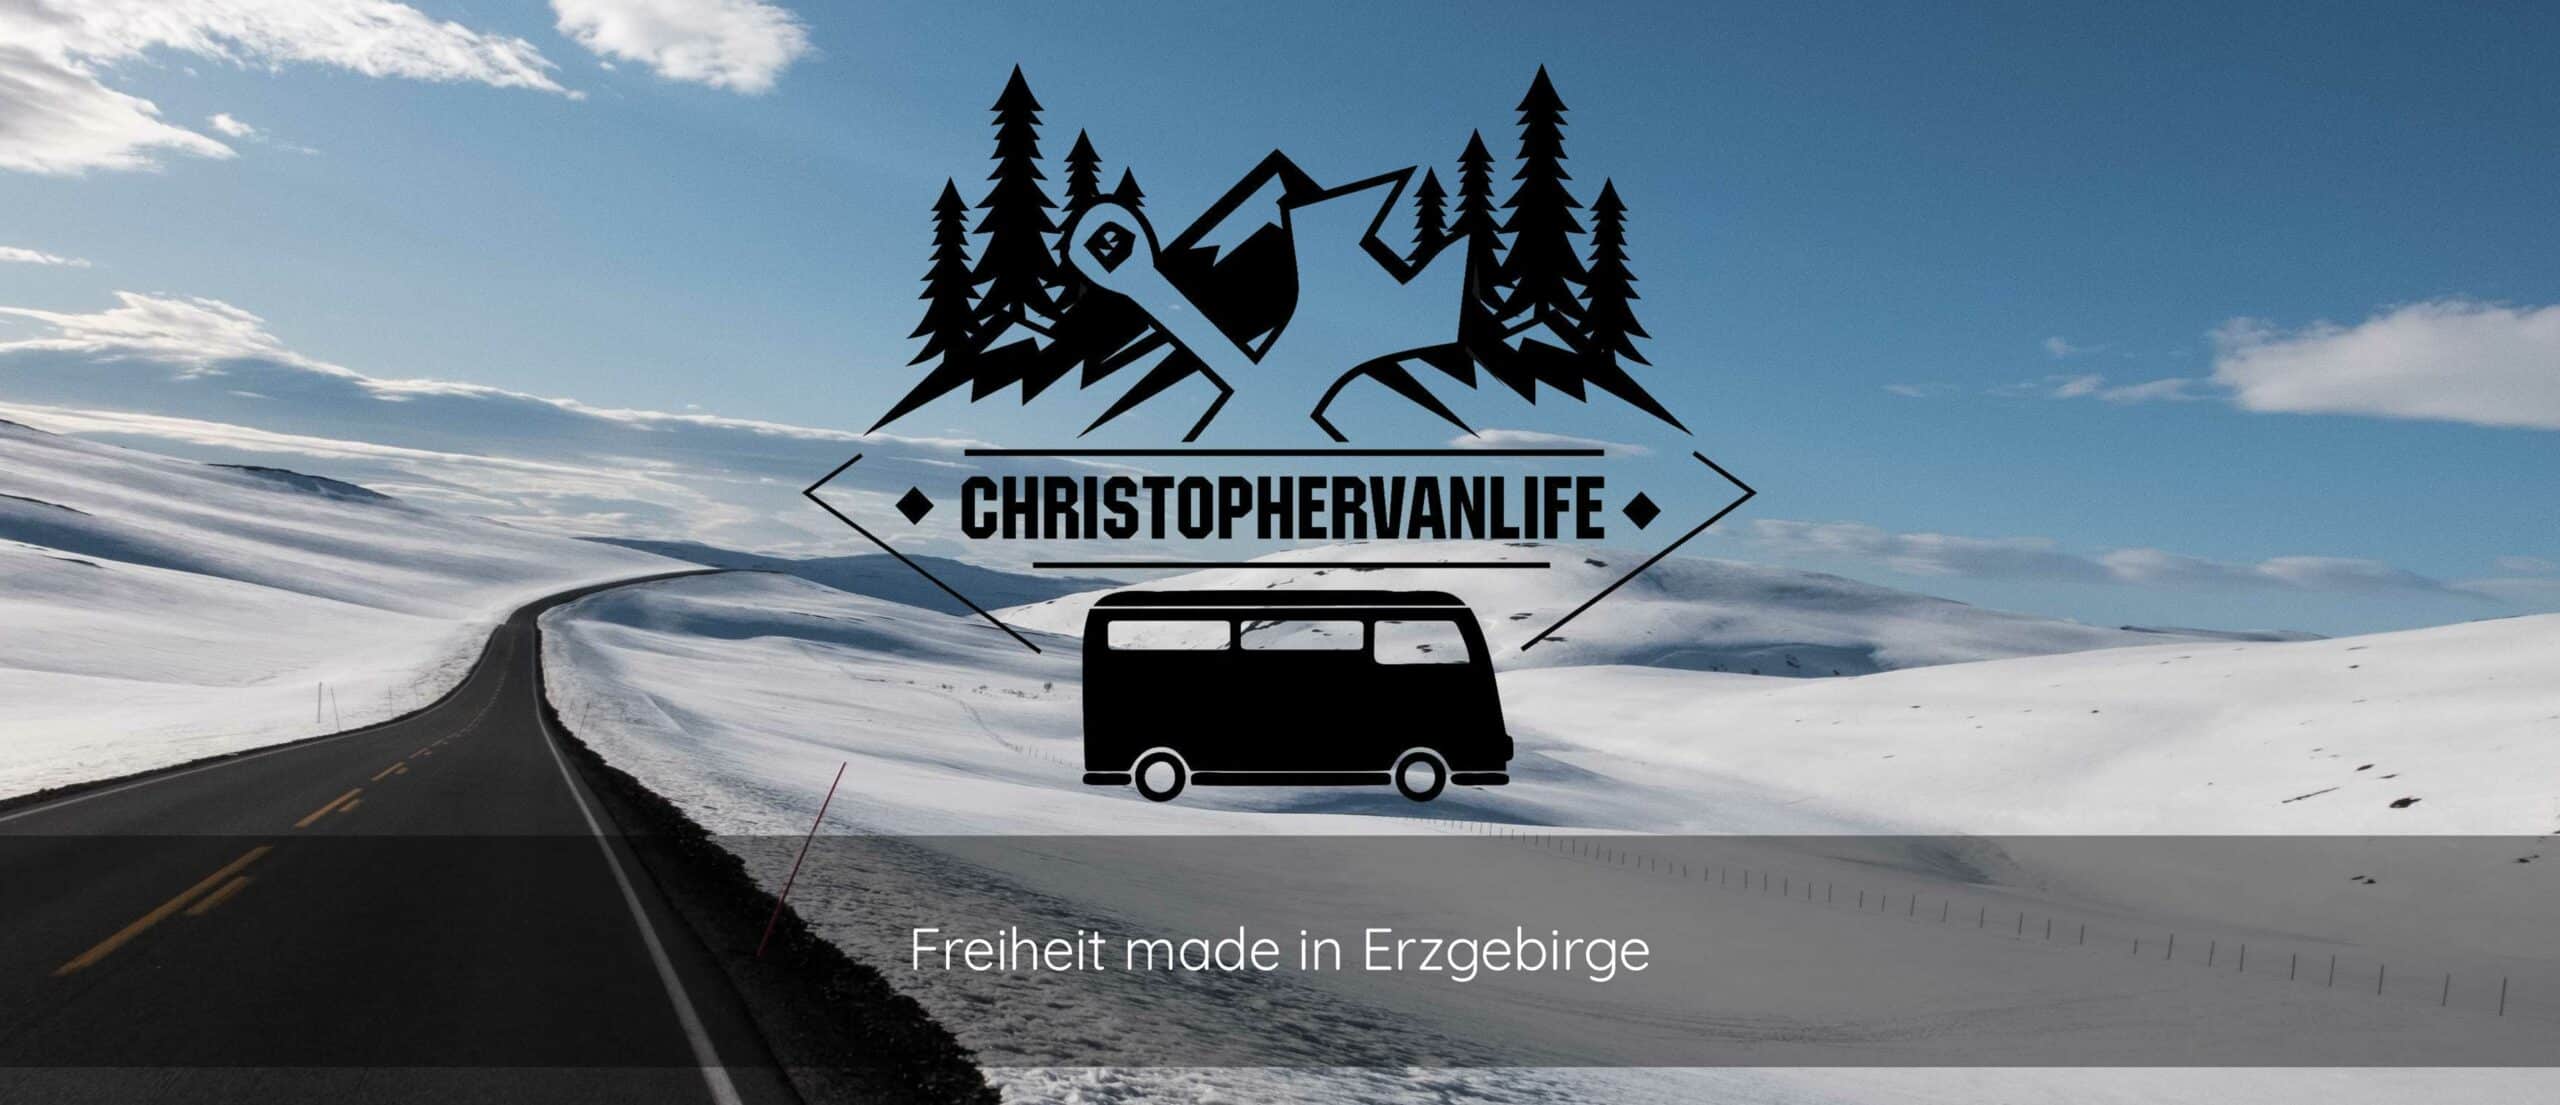 Christopher Vanlife Freiheit made in Erzgebirge